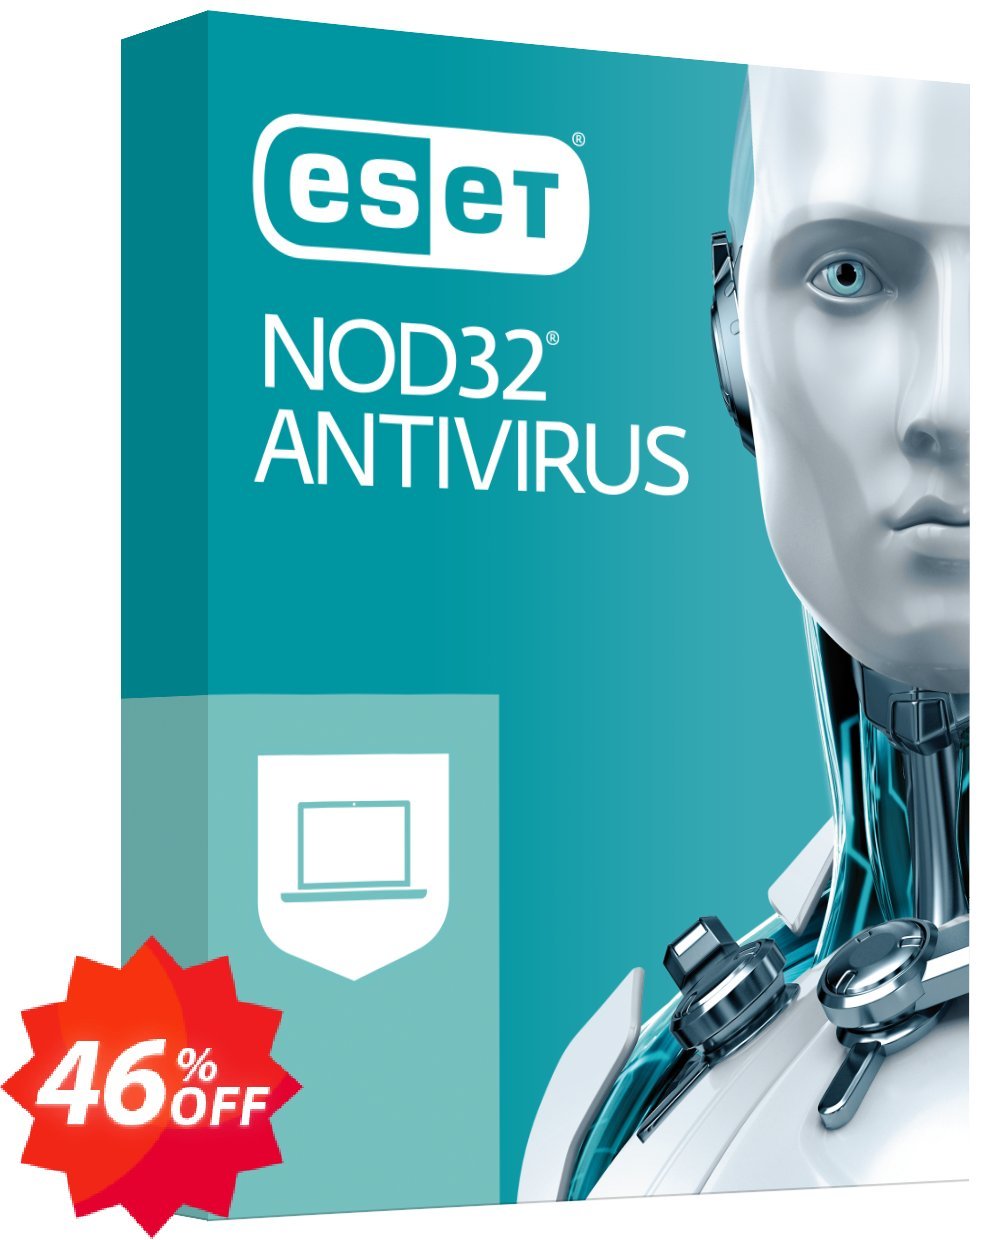 ESET NOD32 Antivirus -  Yearly 1 Device Coupon code 46% discount 